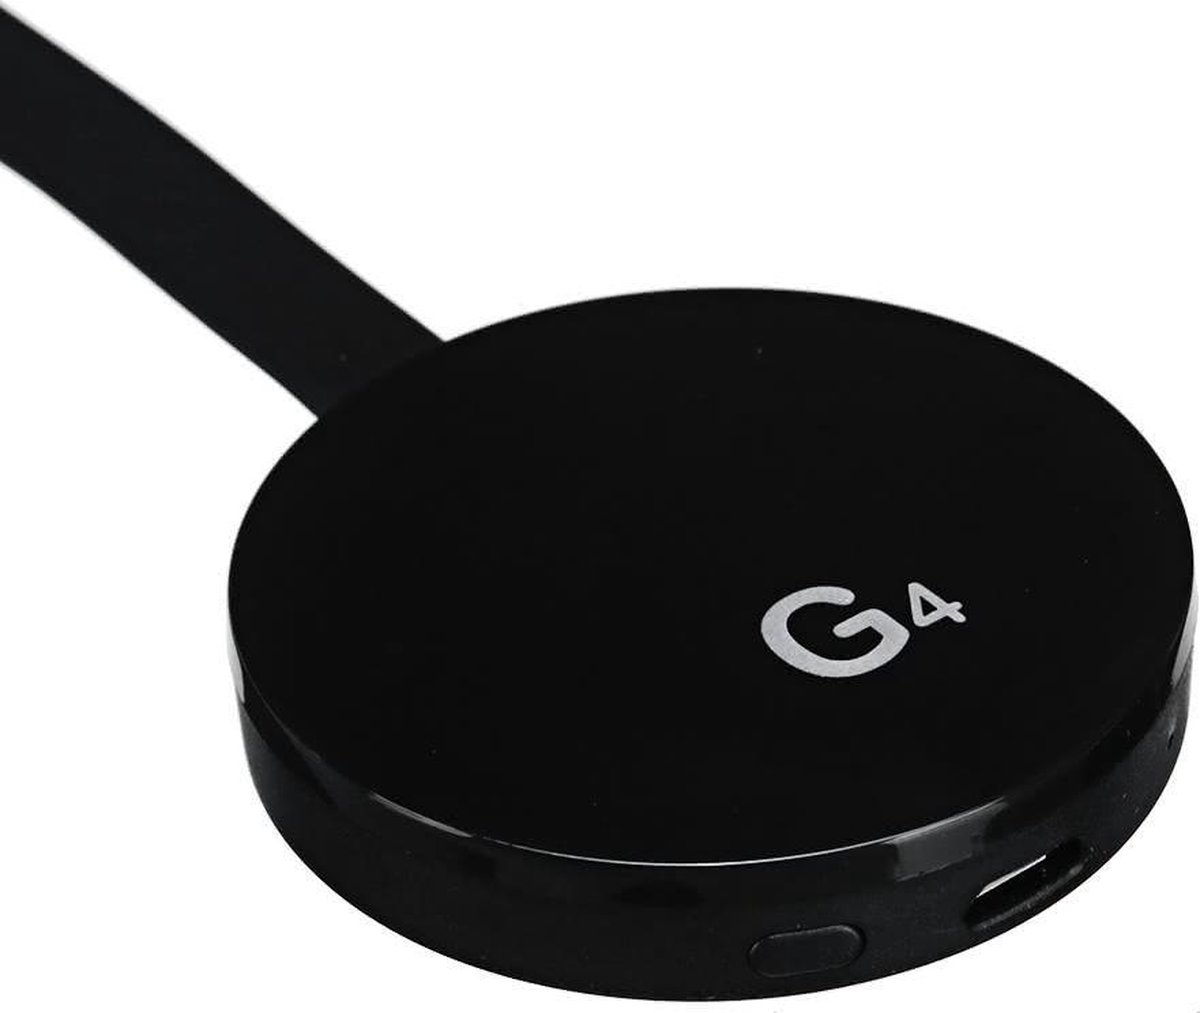 Chromecast dongel, Google Chromecast - TV-dongle - Full HD / G4 HDMI TV-dongle voor Android / IOS Netflix Youtube